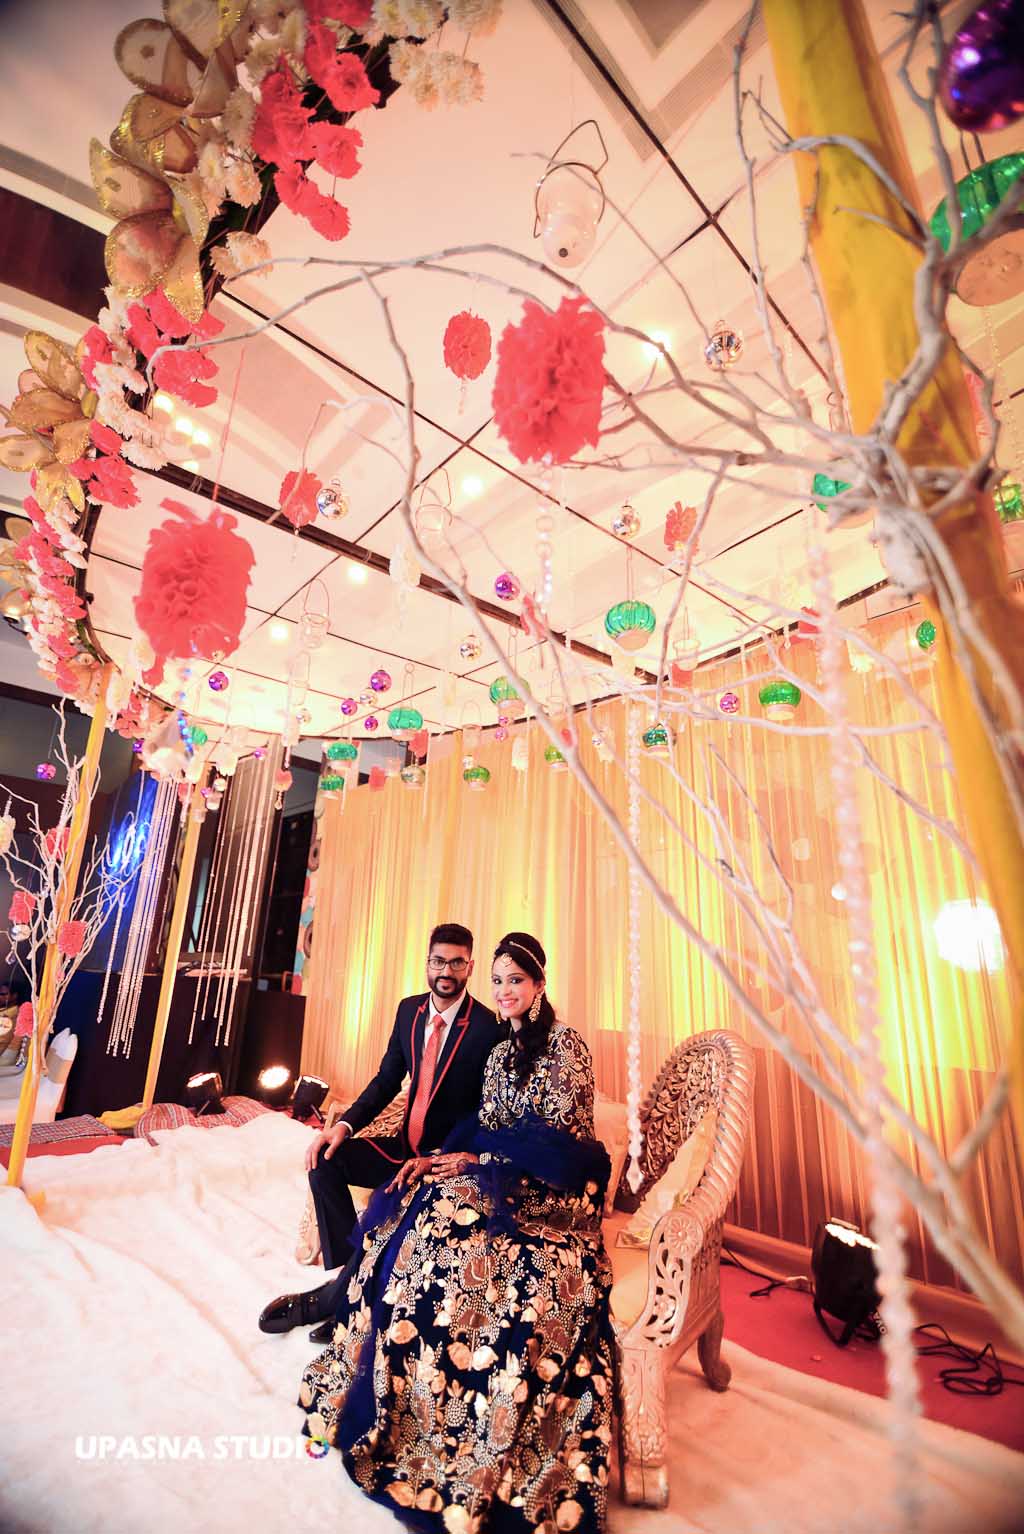 monsoon wedding | outdoor wedding | destination wedding | upasna studios